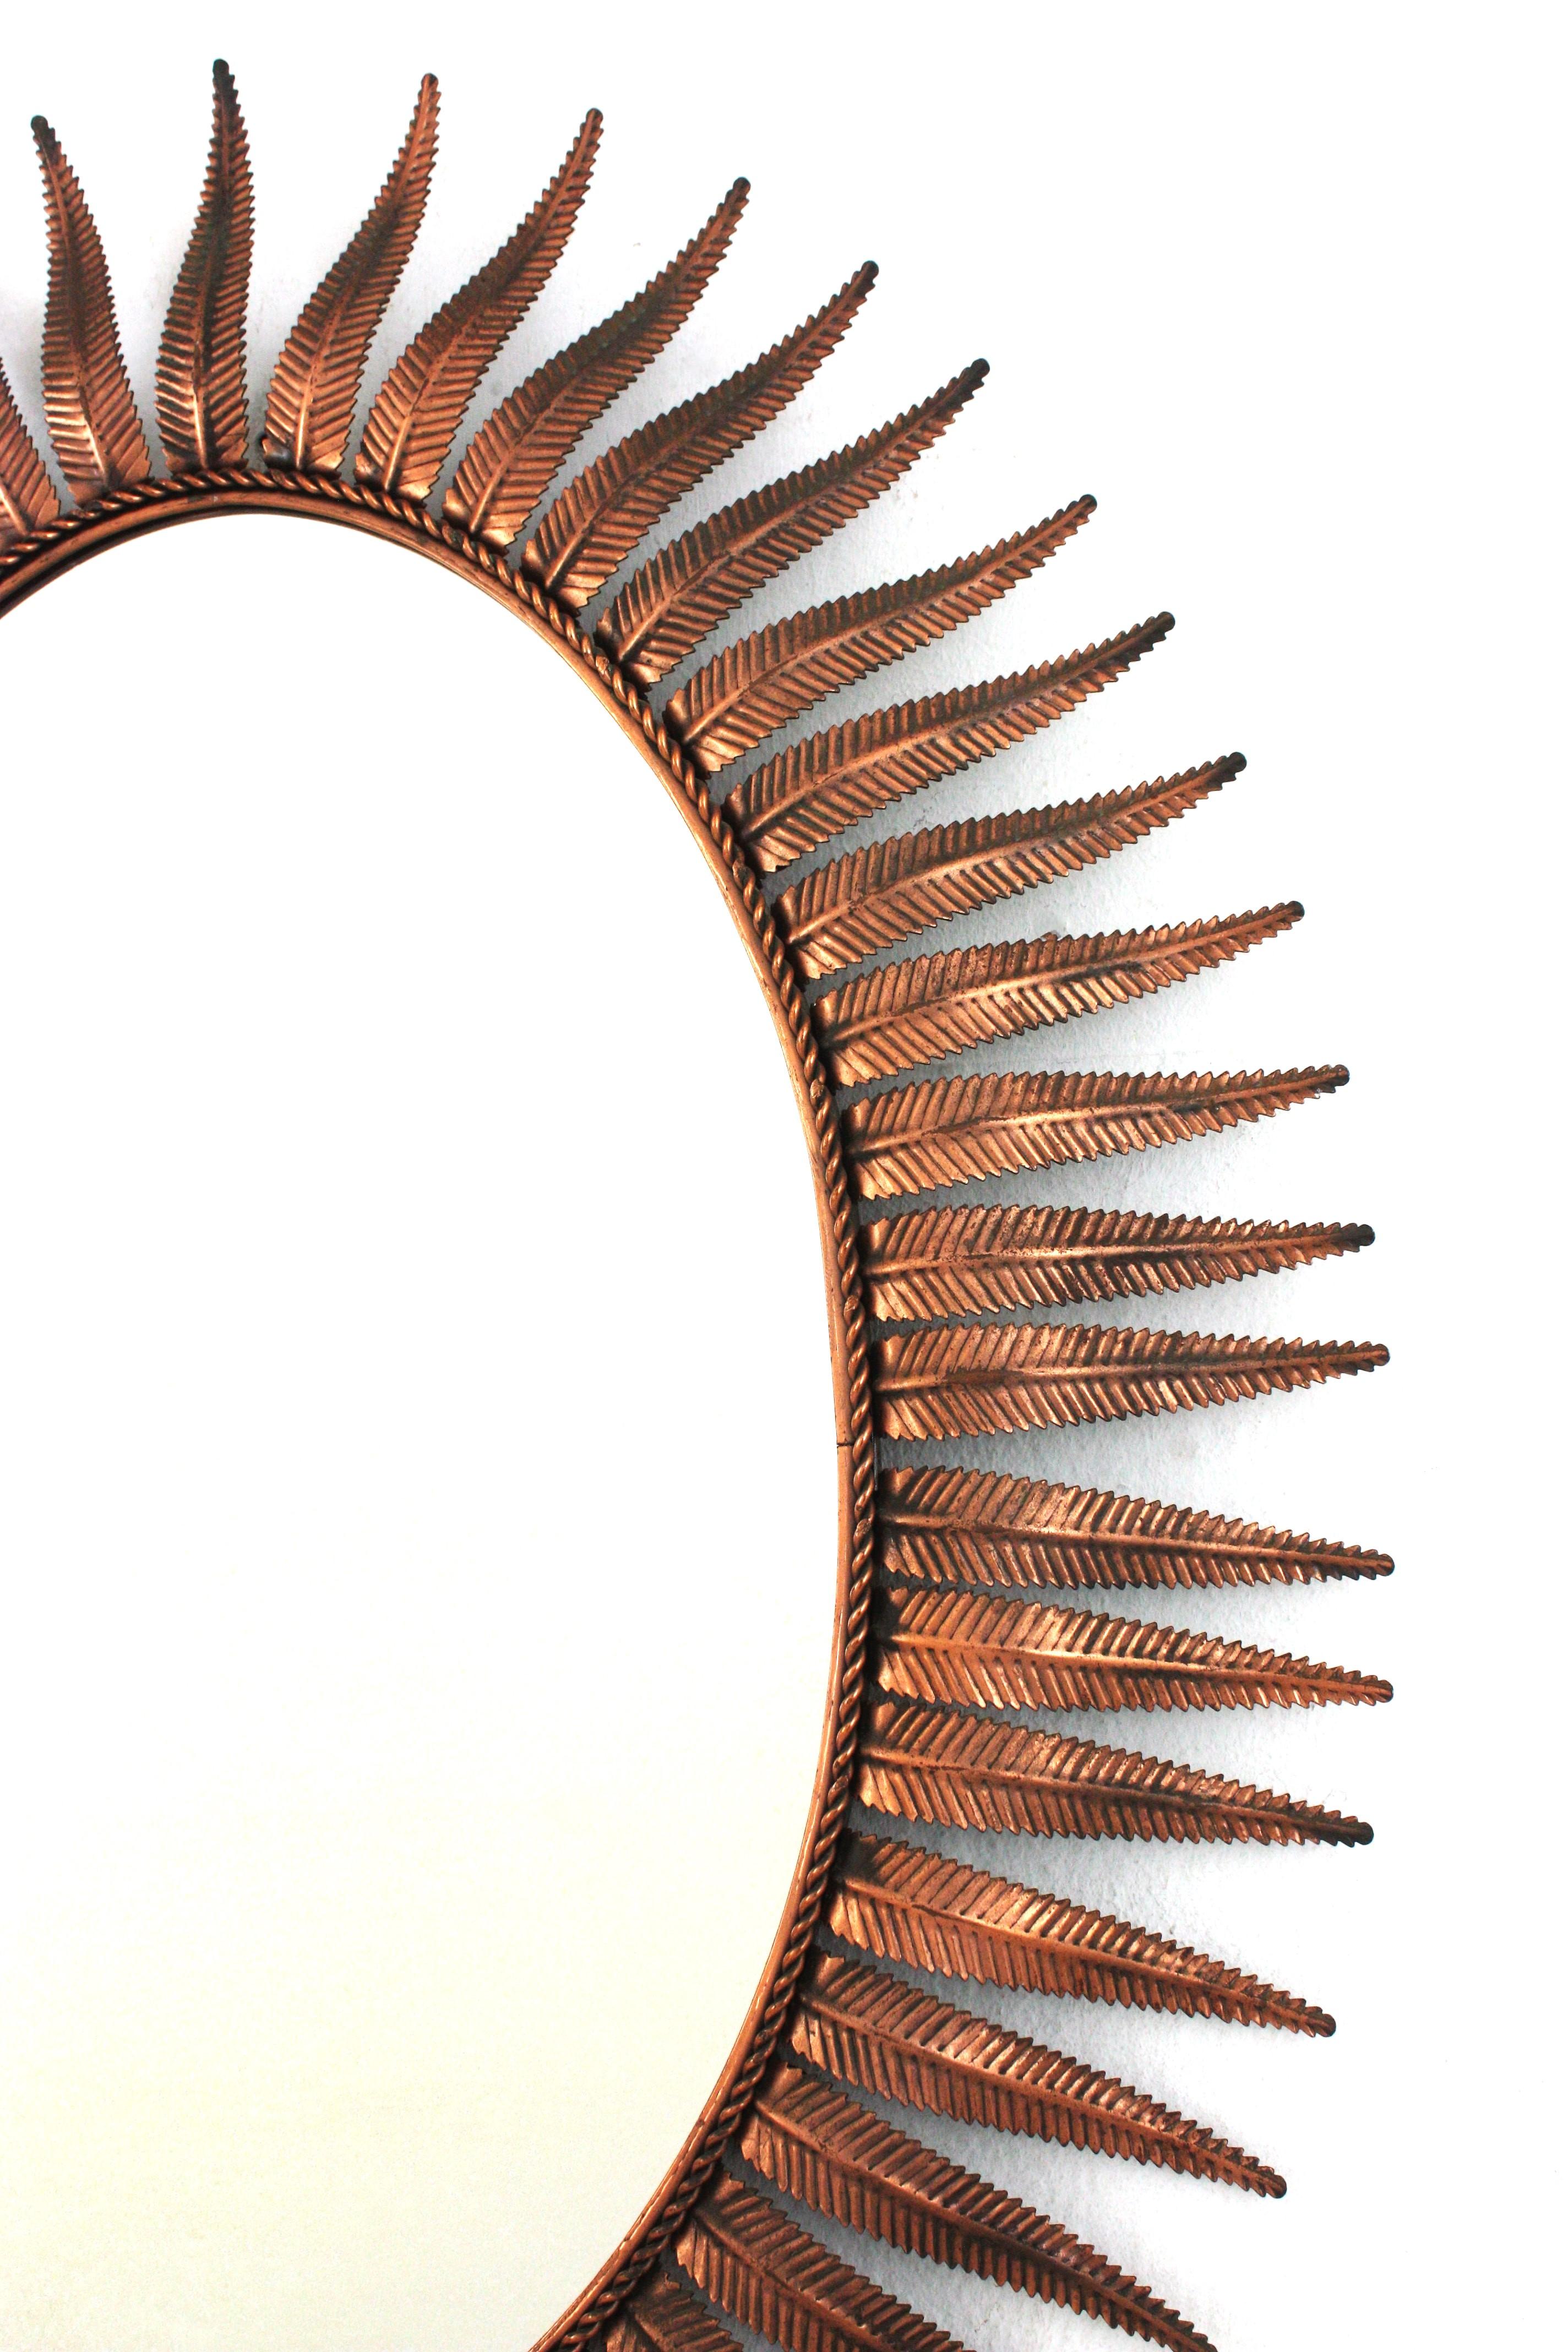 Spanish Sunburst Oval Mirror in Copper Metal, 1950s For Sale 2